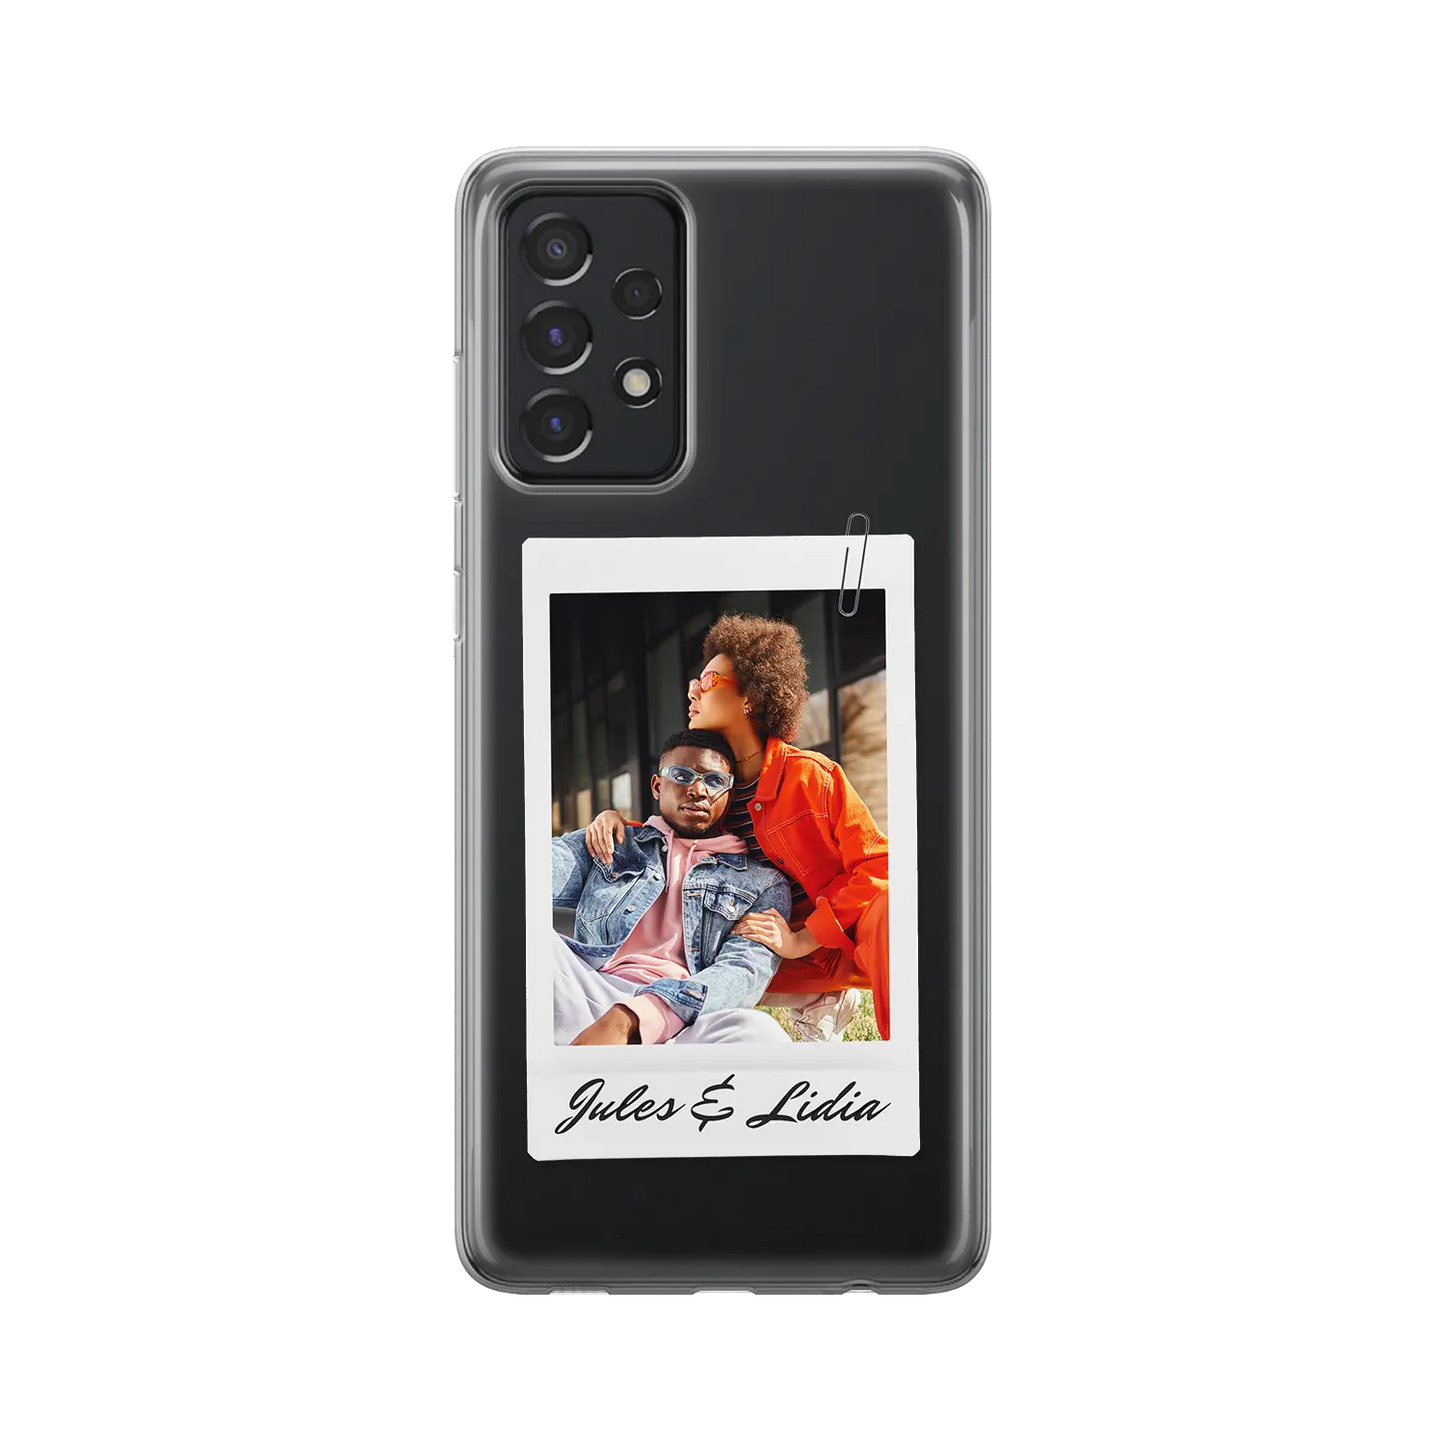 Polaroid - Carcasa personalizada Galaxy A